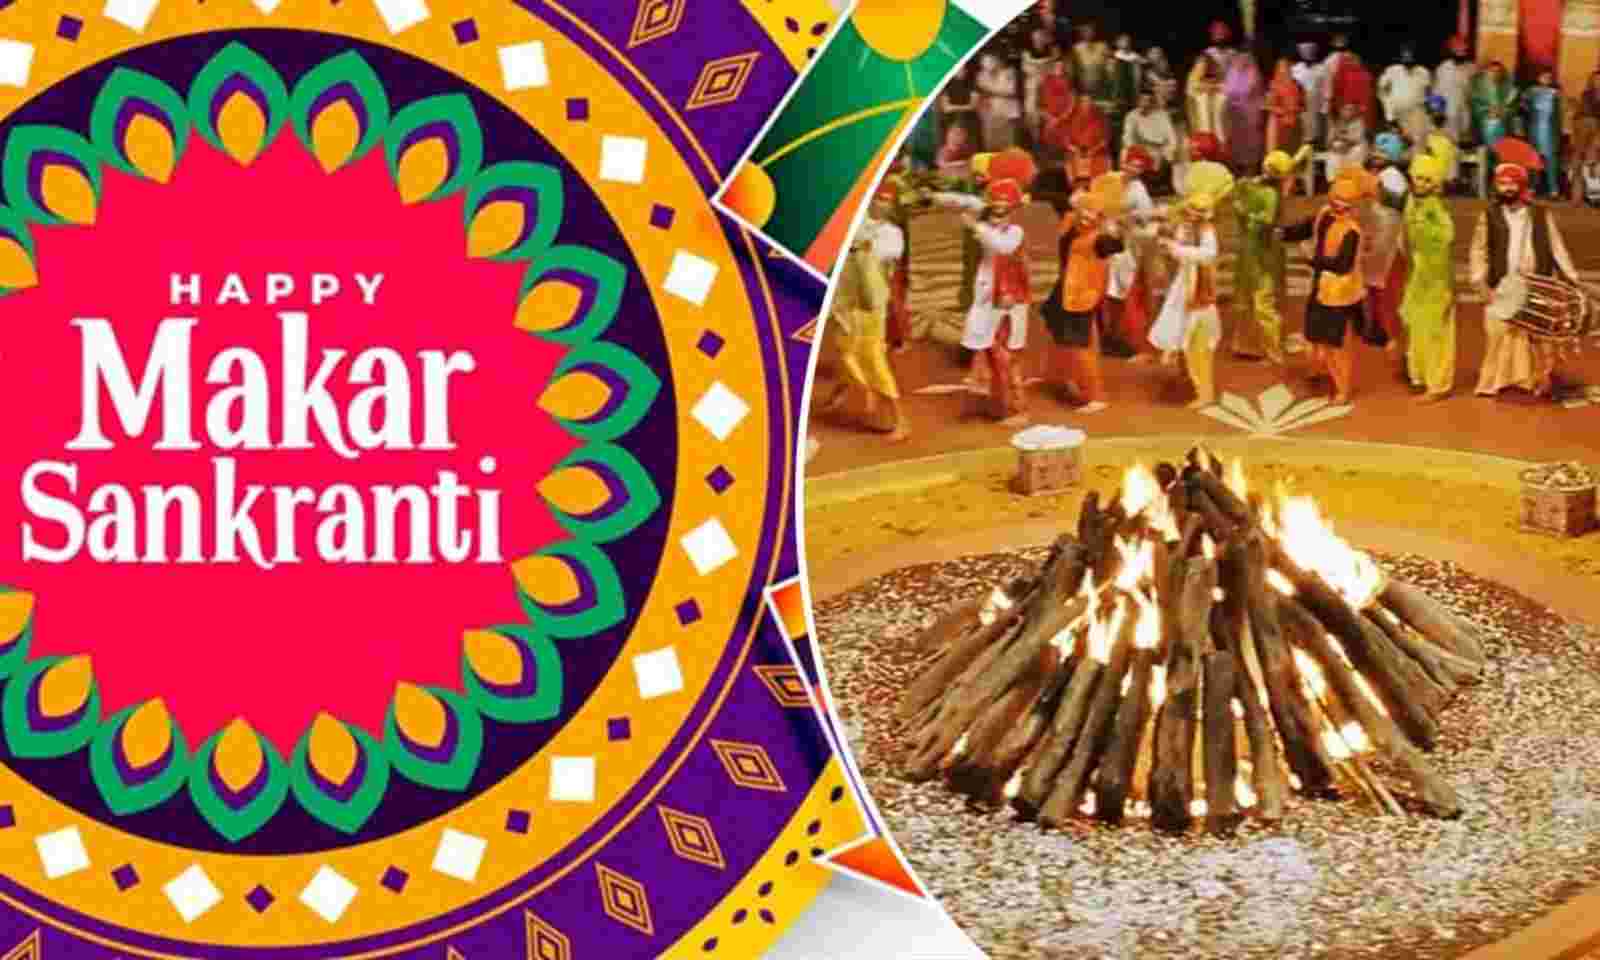 Makar Sankranti 2020: The Significance Of This Harvest Festiva